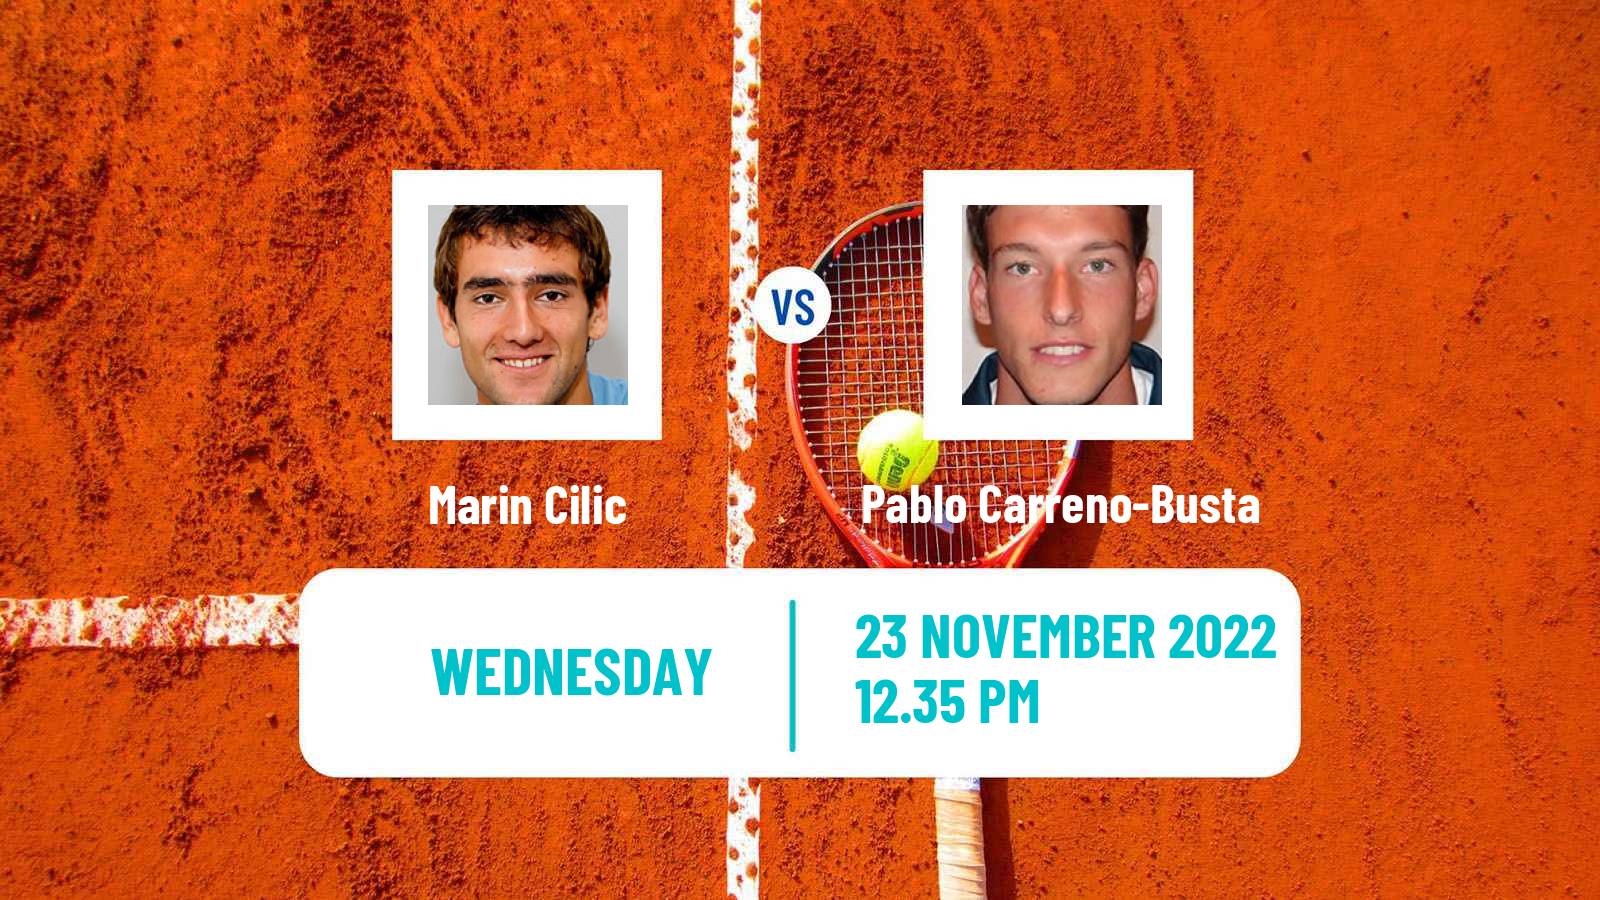 Tennis Davis Cup World Group Marin Cilic - Pablo Carreno-Busta